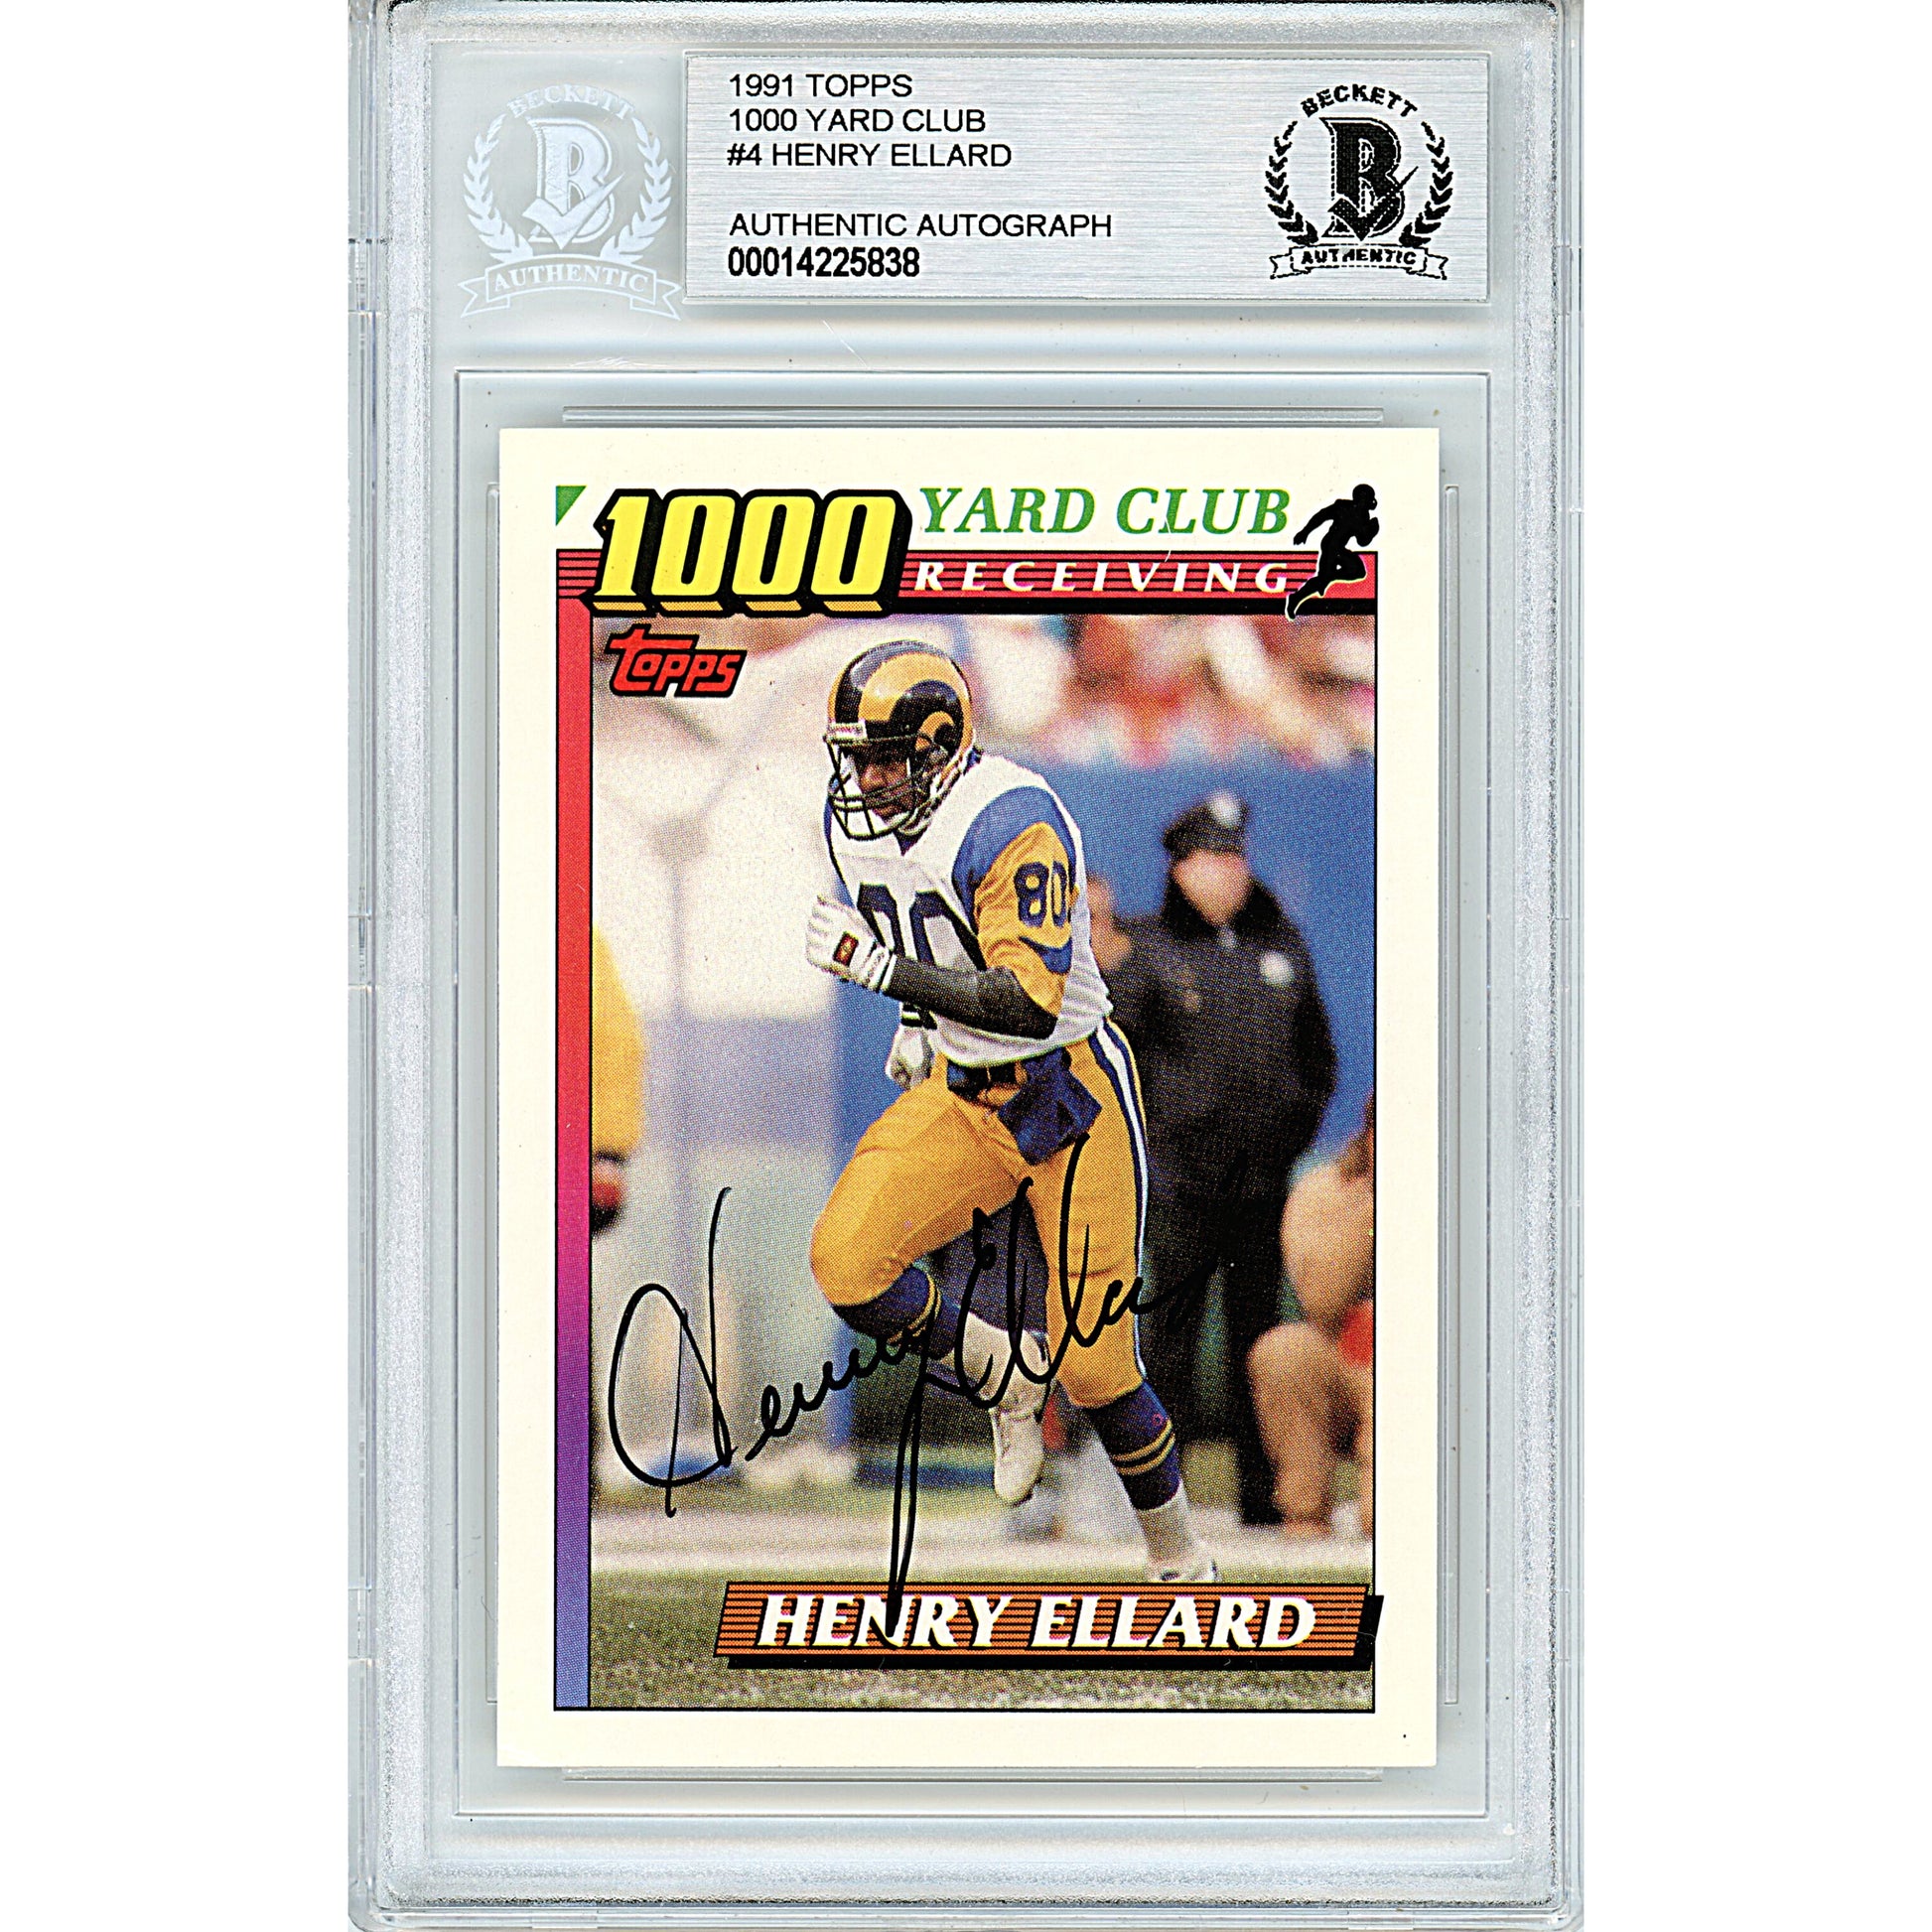 Footballs- Autographed- Henry Ellard Signed Los Angeles Rams 1991 Topps 1000 Yard Club Football Card Beckett BAS Slabbed 00014225838 - 101